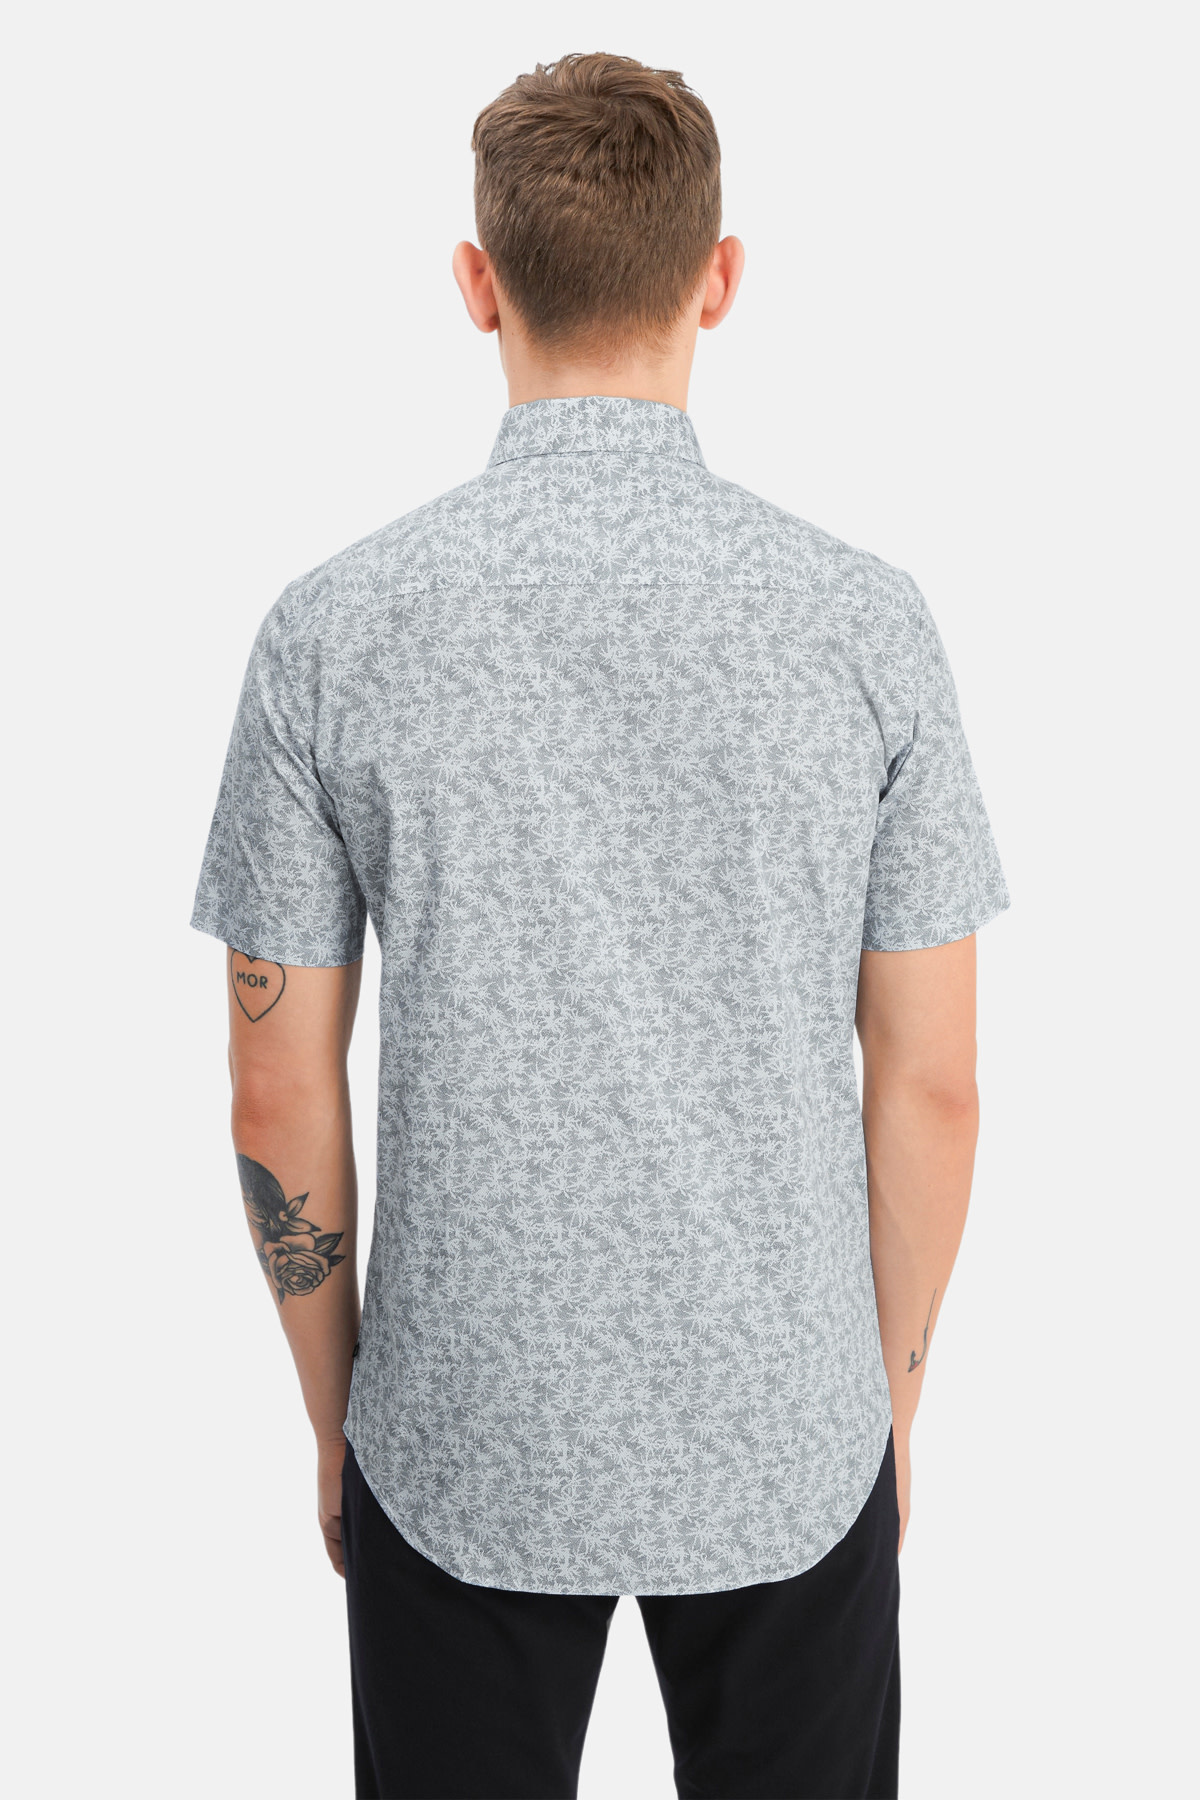 Trostol Short Sleeve Dress Shirt - Navy Dotted Print